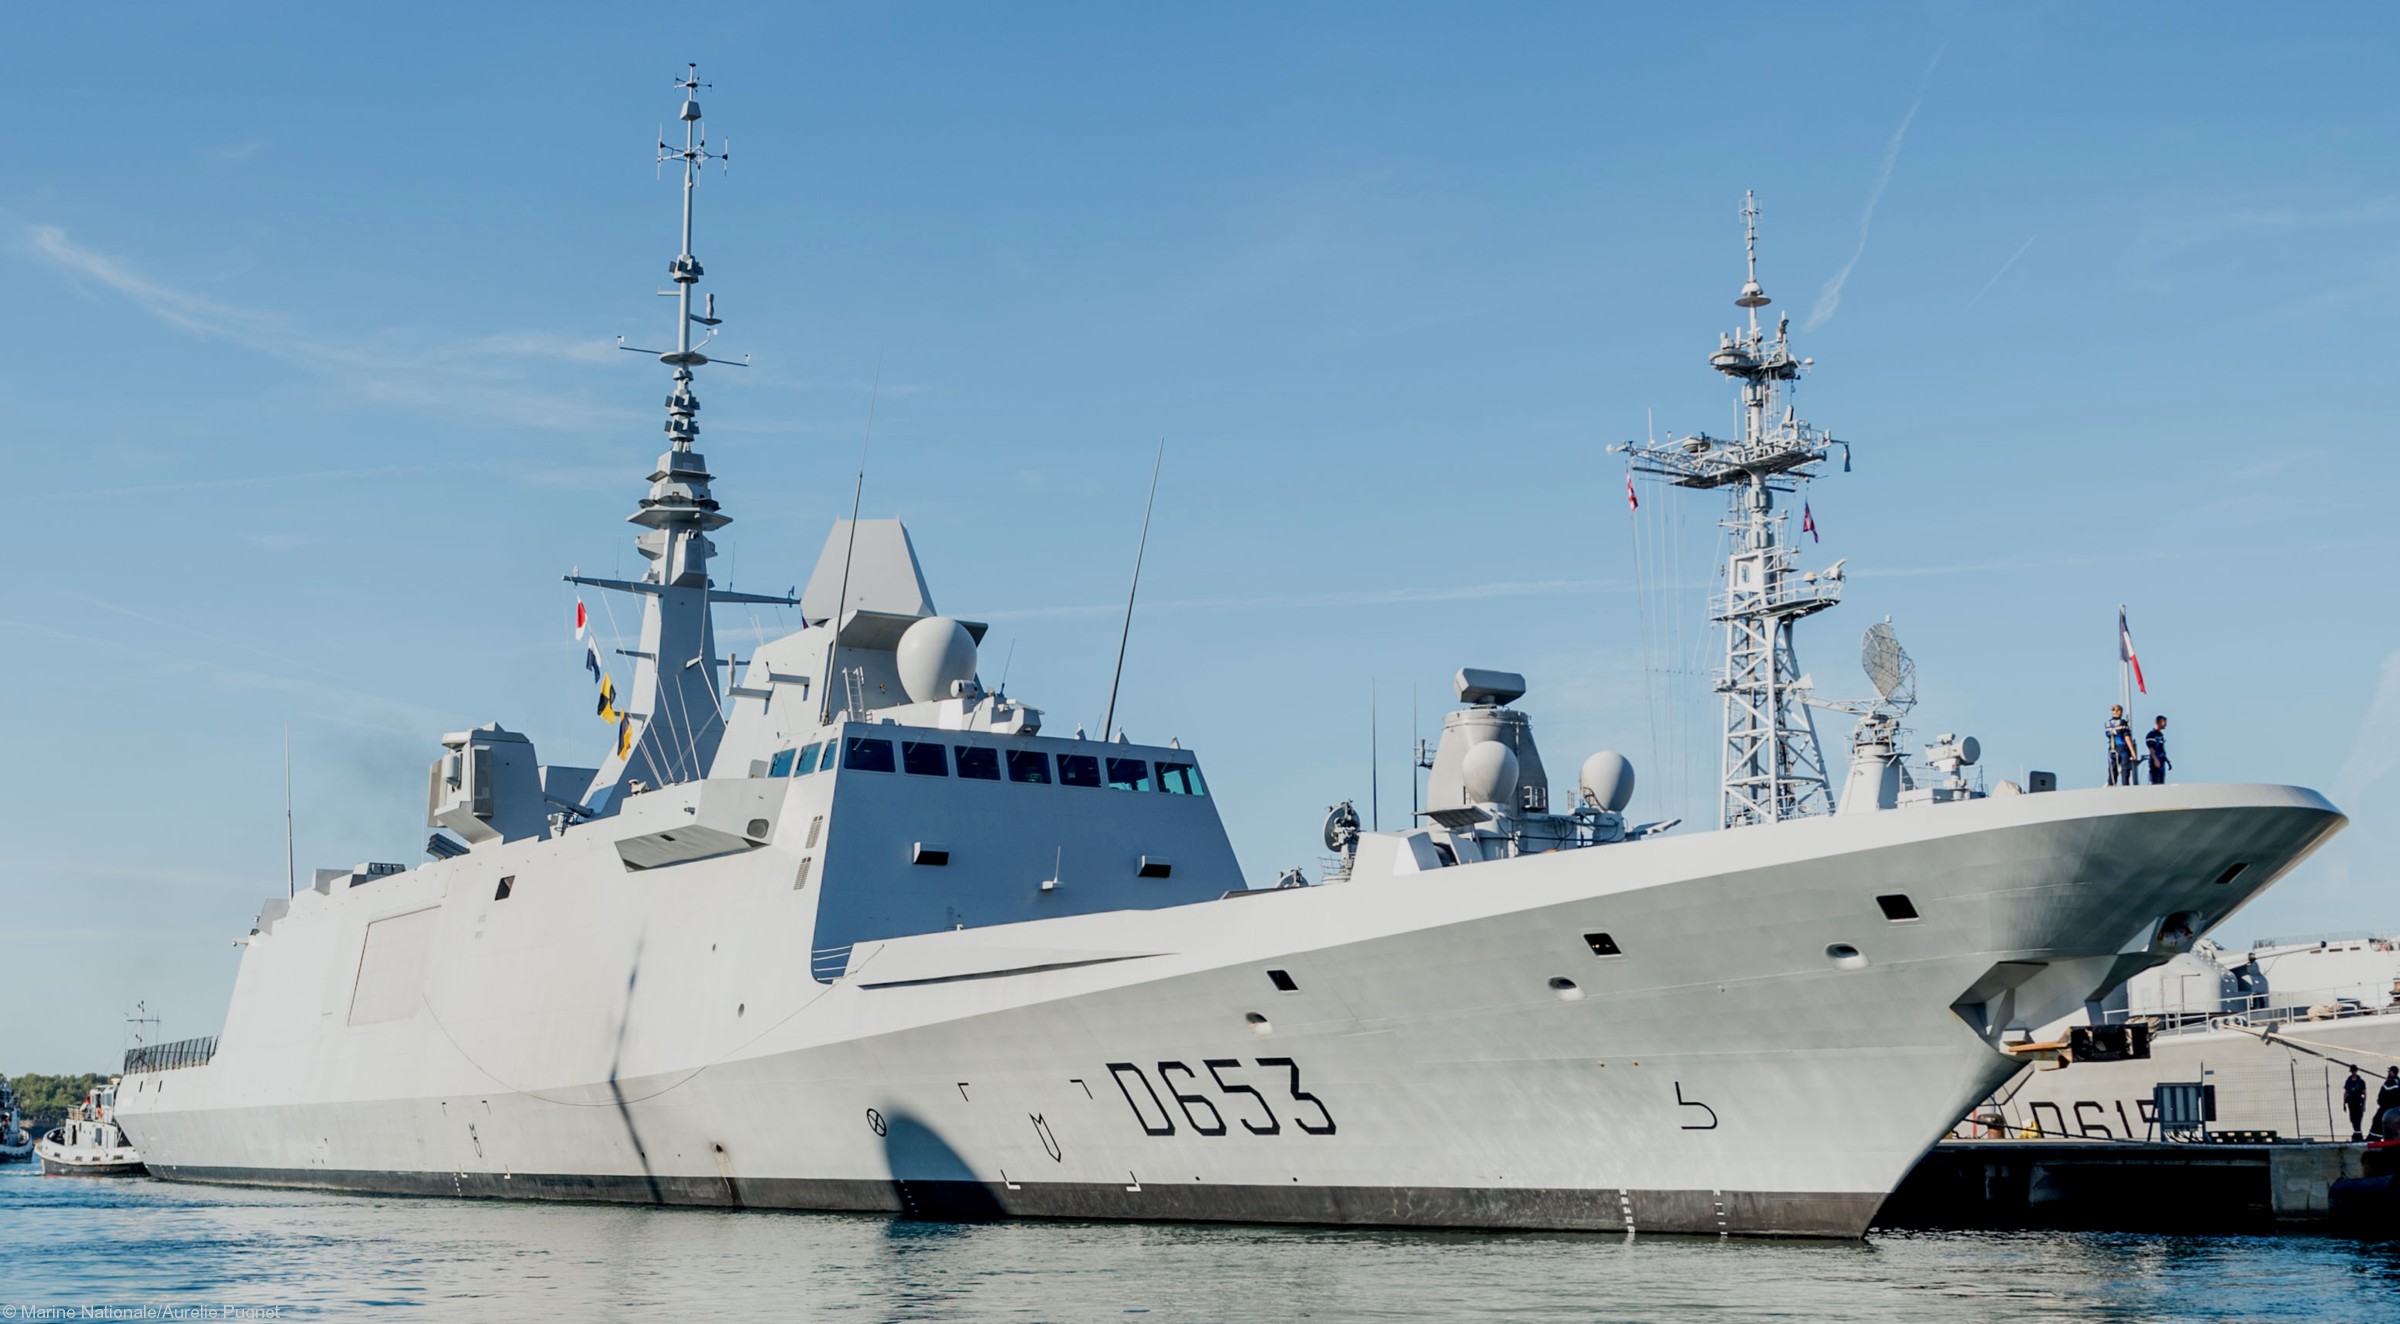 d-653 fs languedoc fremm aquitaine class frigate fregate multi purpose french navy marine nationale 03